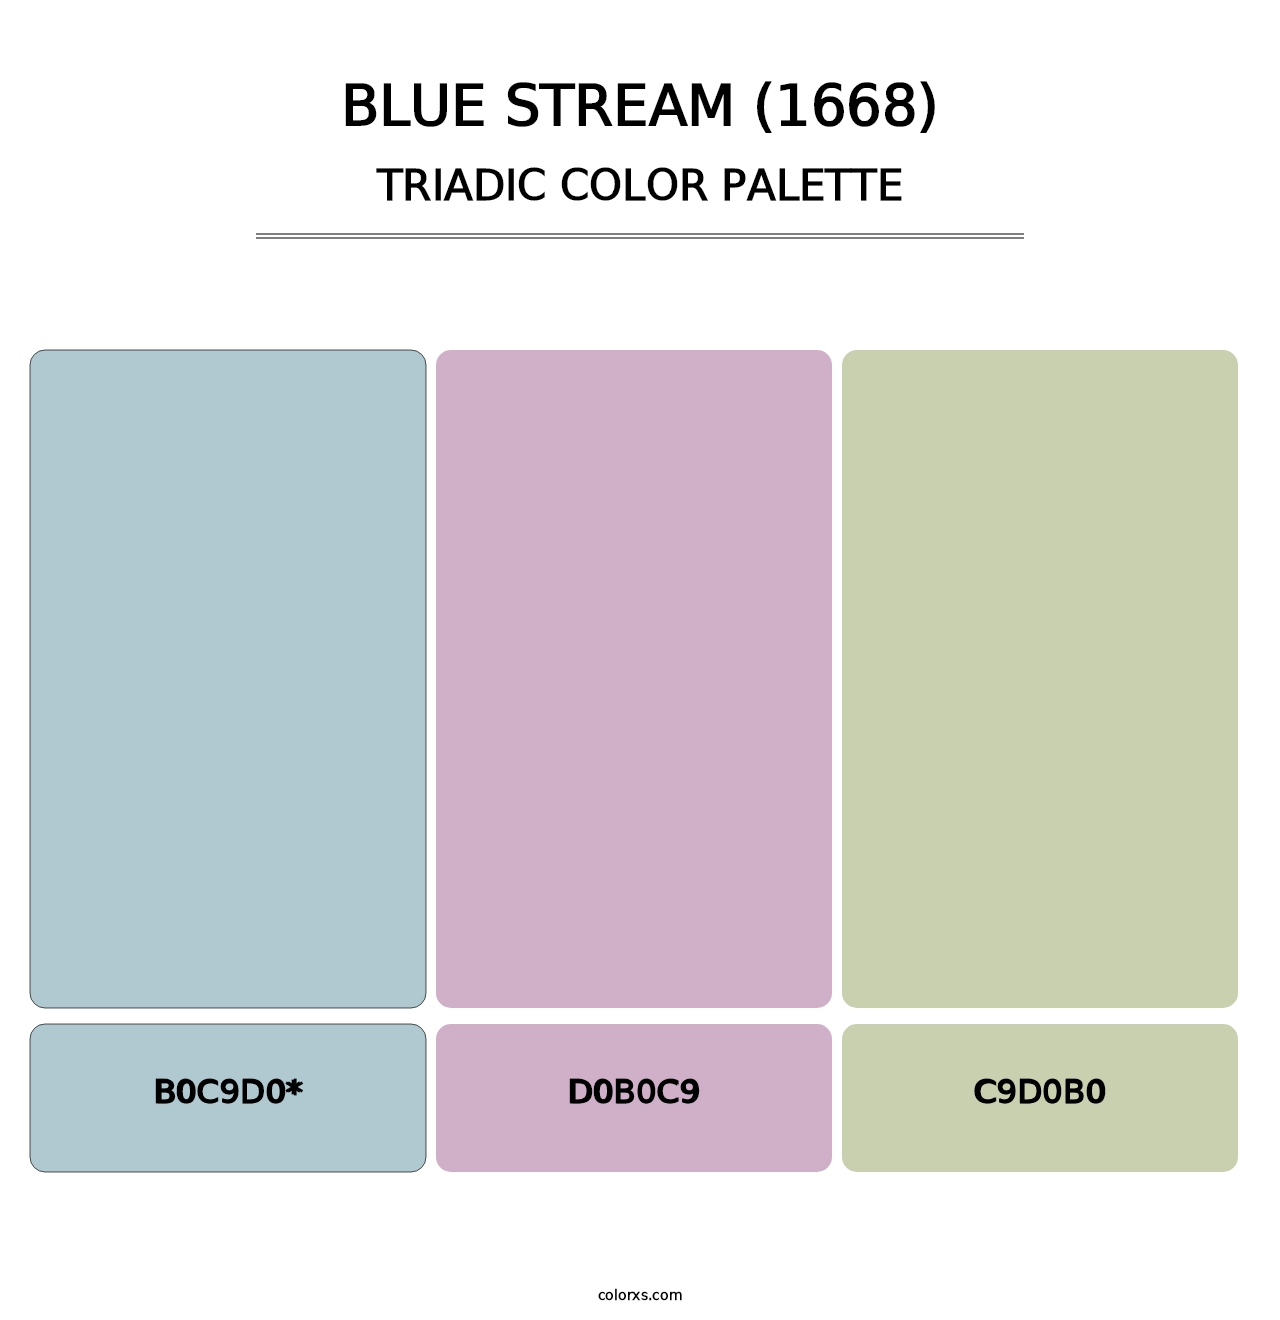 Blue Stream (1668) - Triadic Color Palette